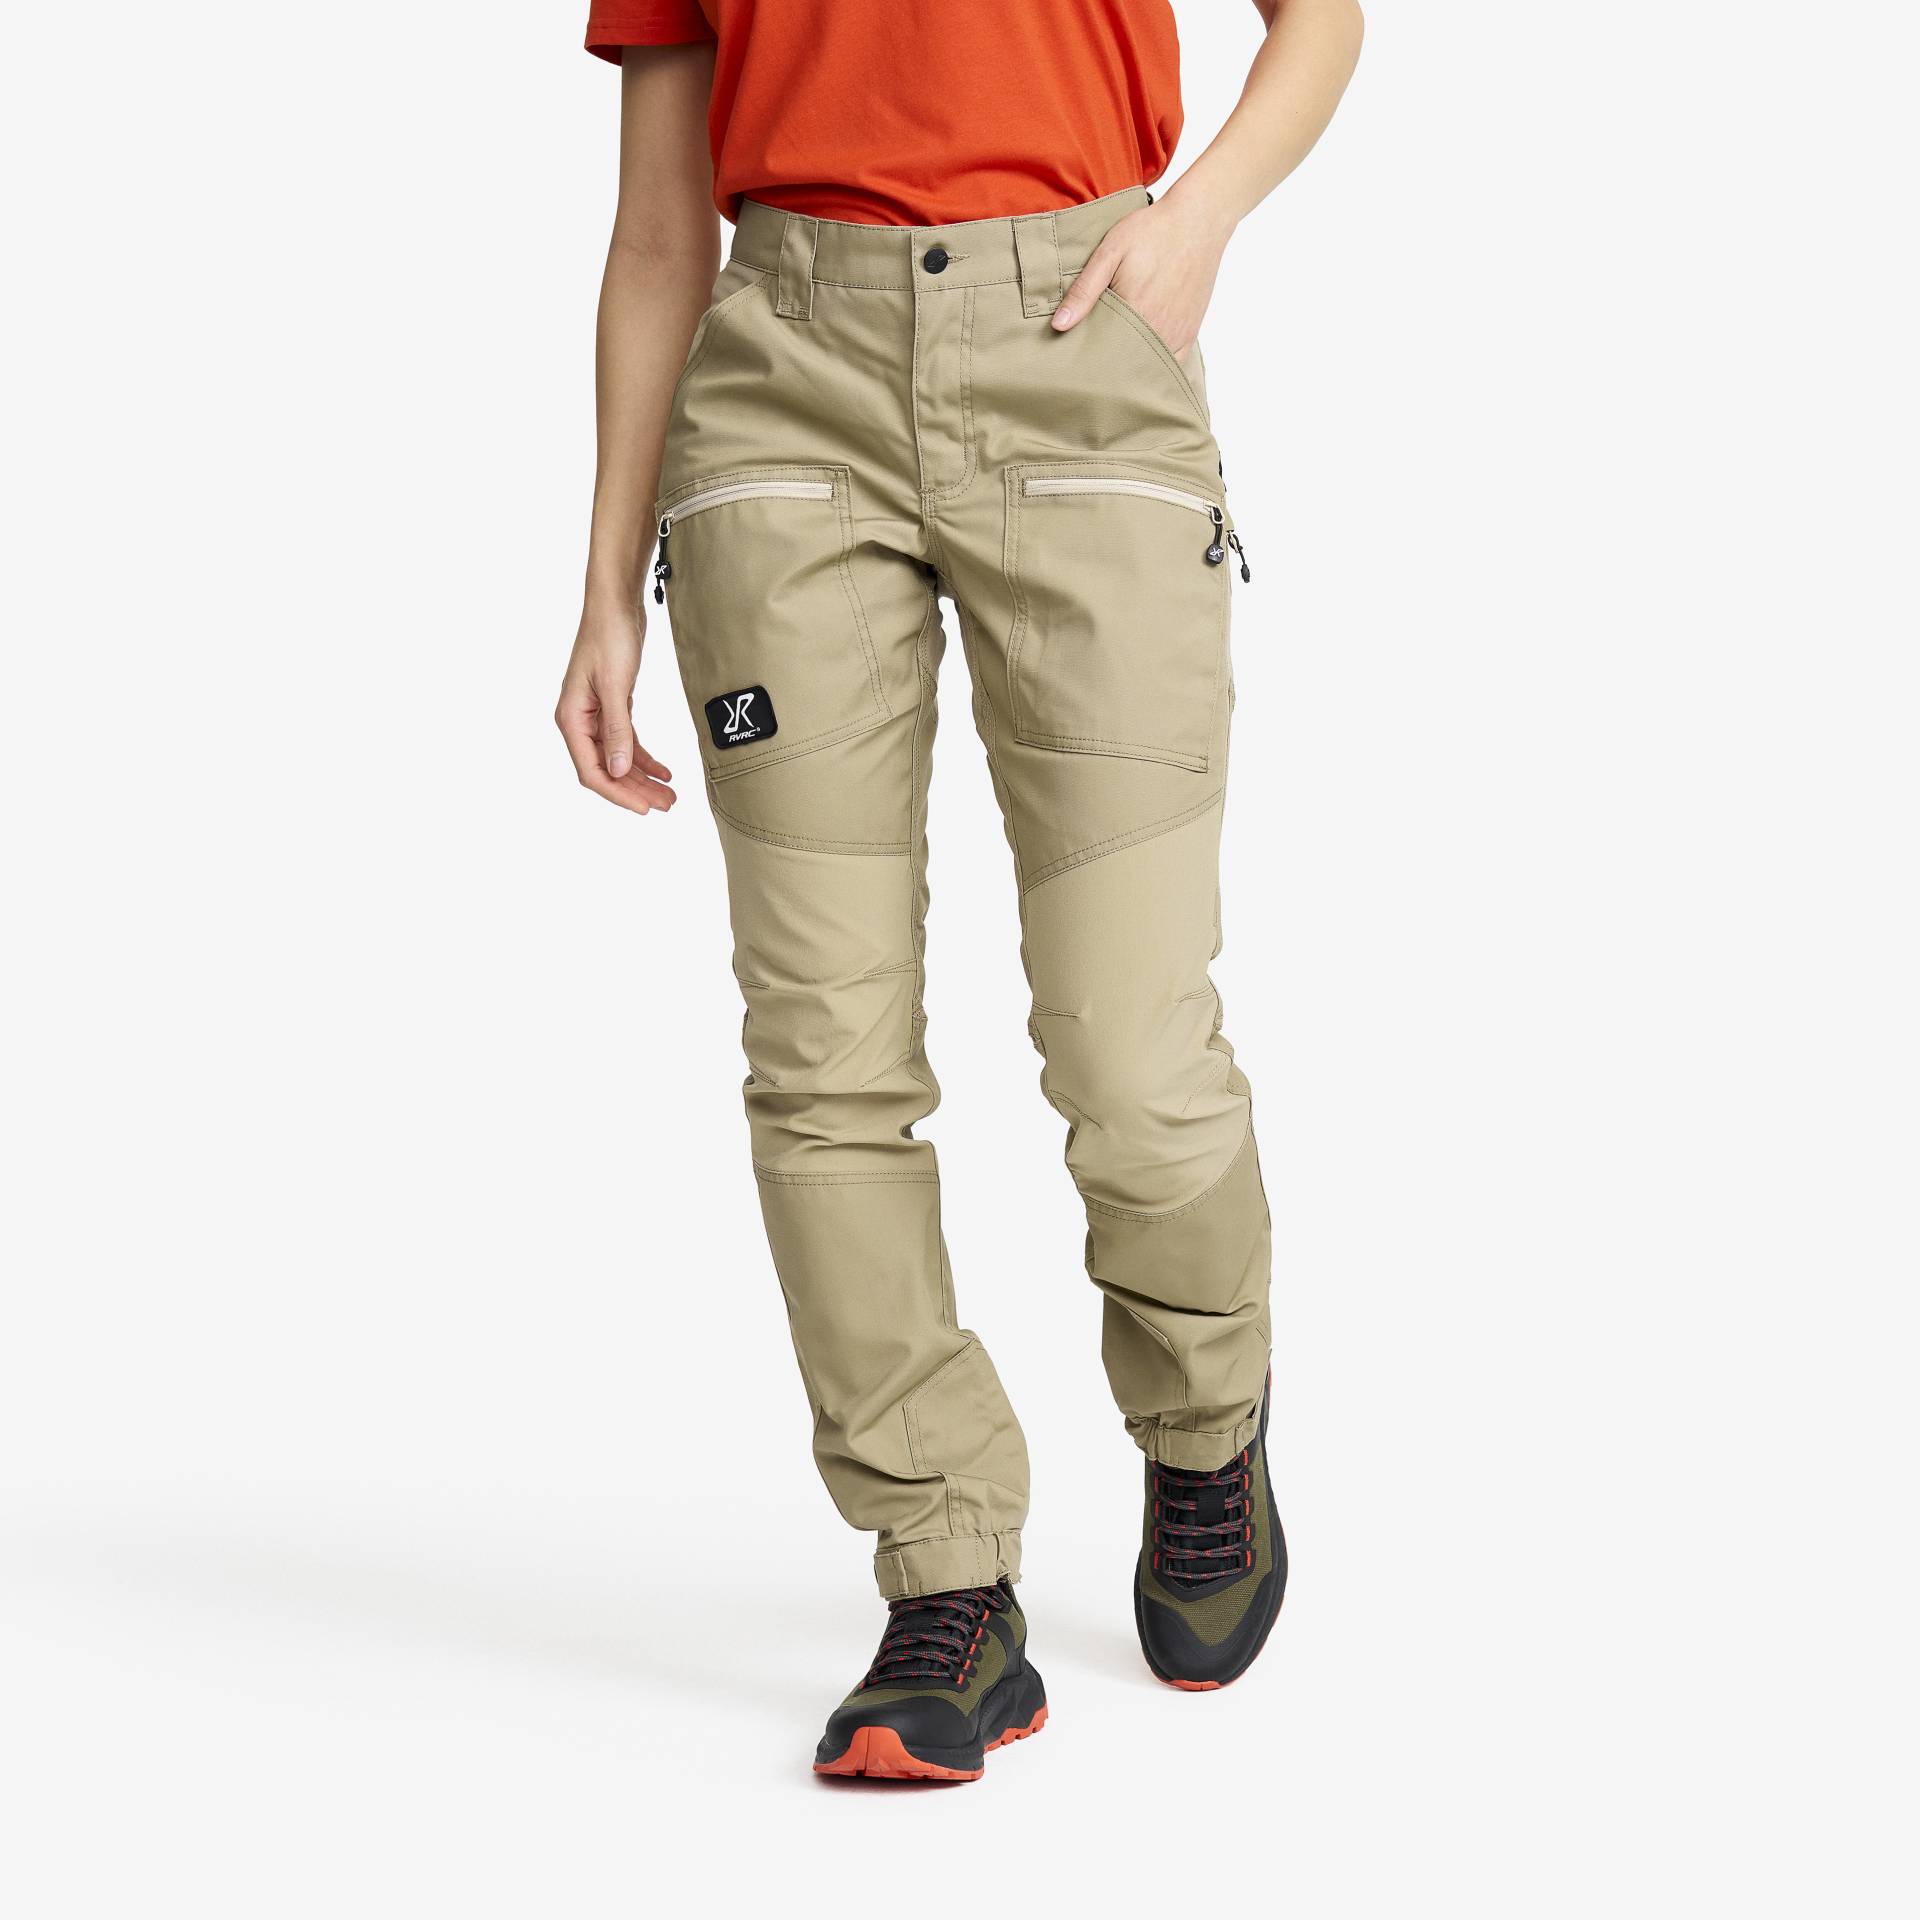 Nordwand Pro Pants Damen Khaki, Größe:S - Outdoorhose, Wanderhose & Trekkinghose von RevolutionRace